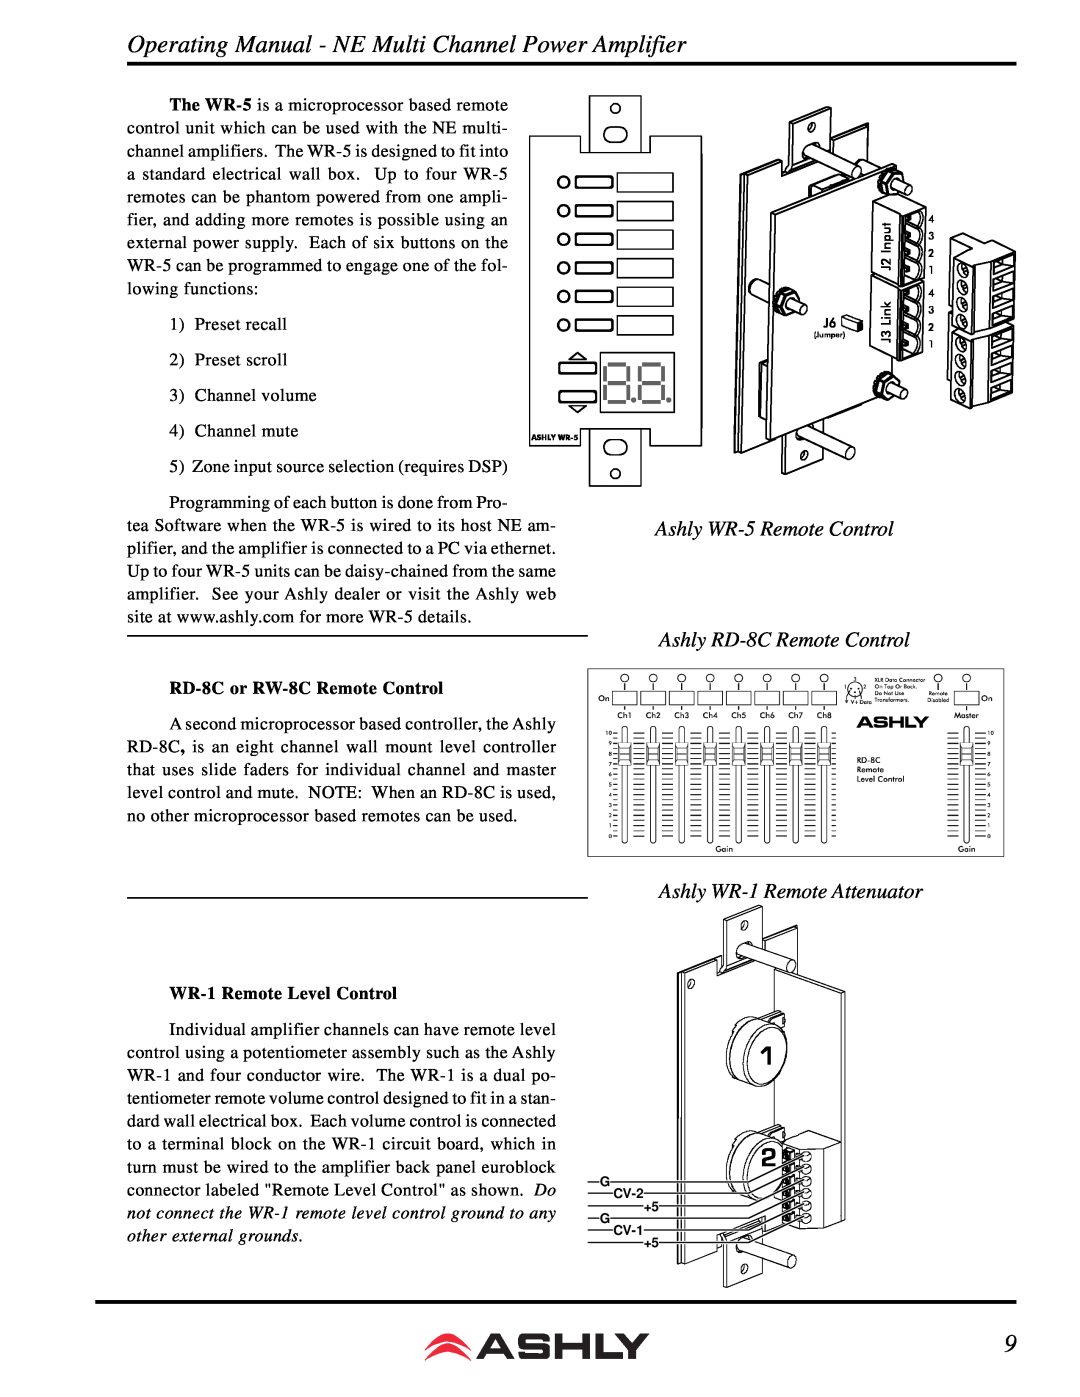 Ashly NE 4200.25 manual Ashly WR-5Remote Control, Ashly RD-8CRemote Control, Ashly WR-1Remote Attenuator 